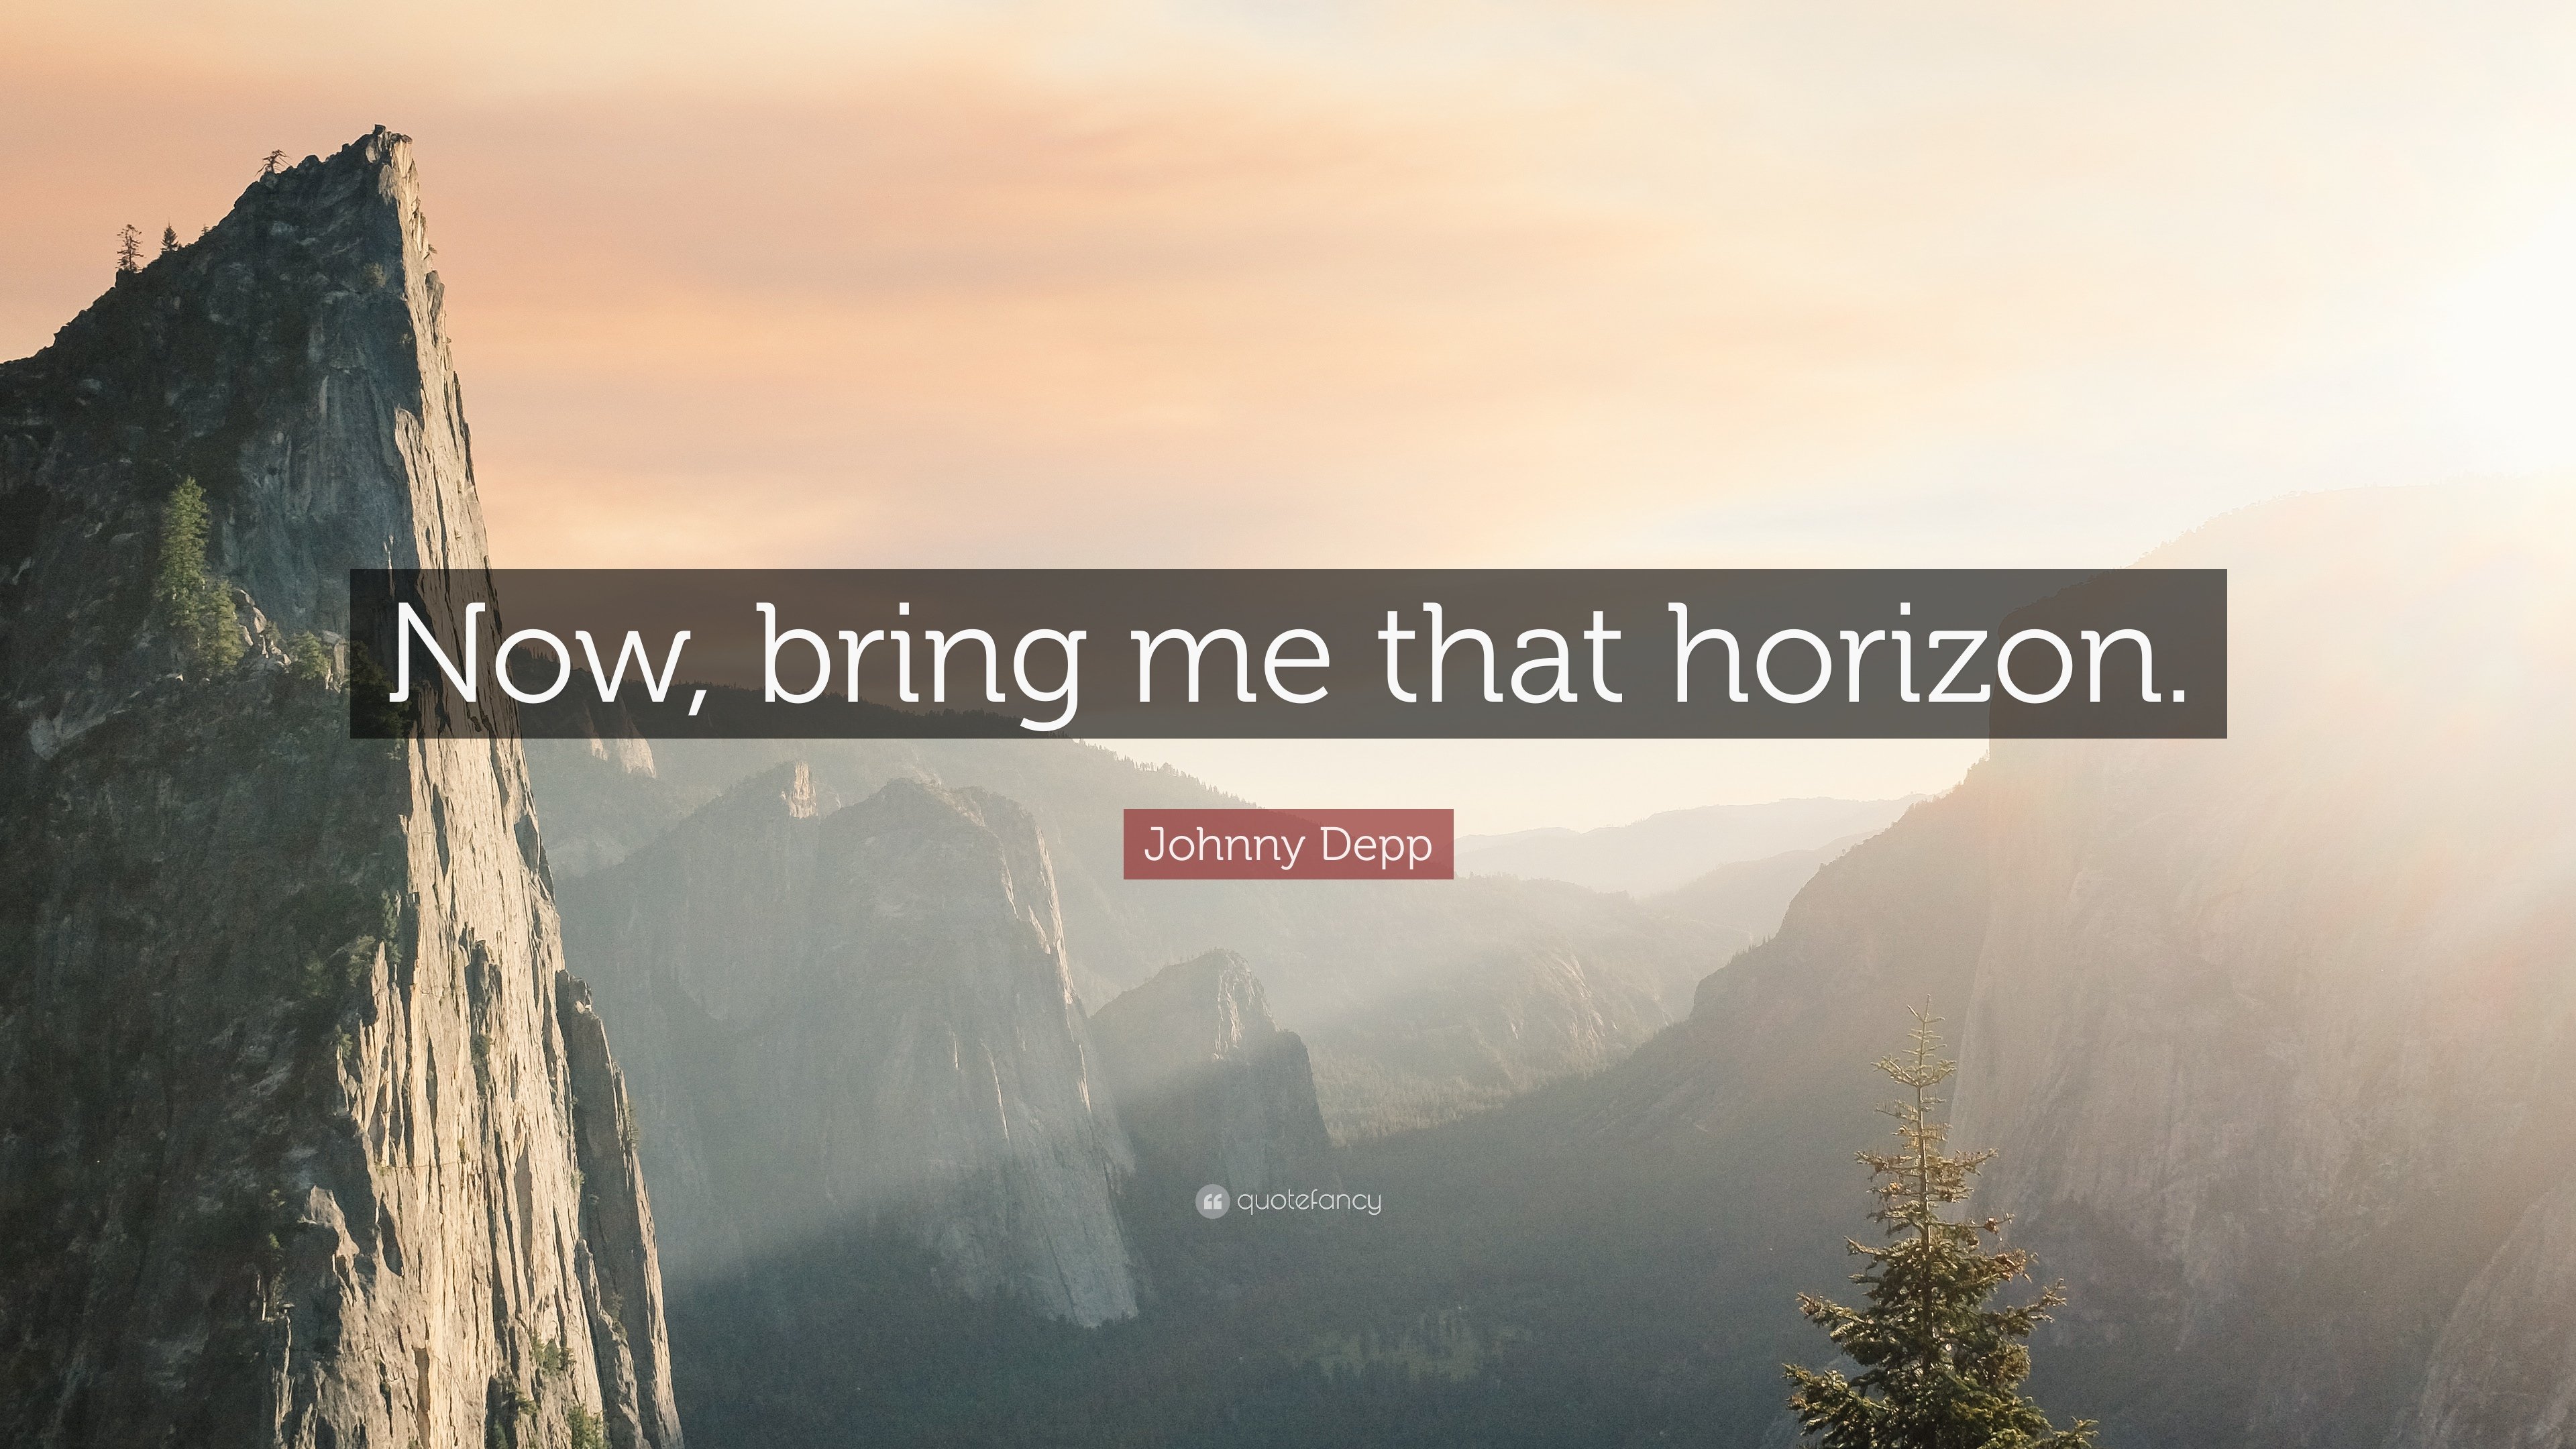 Johnny Depp Quote: “Now, bring me that horizon.” 12 wallpaper